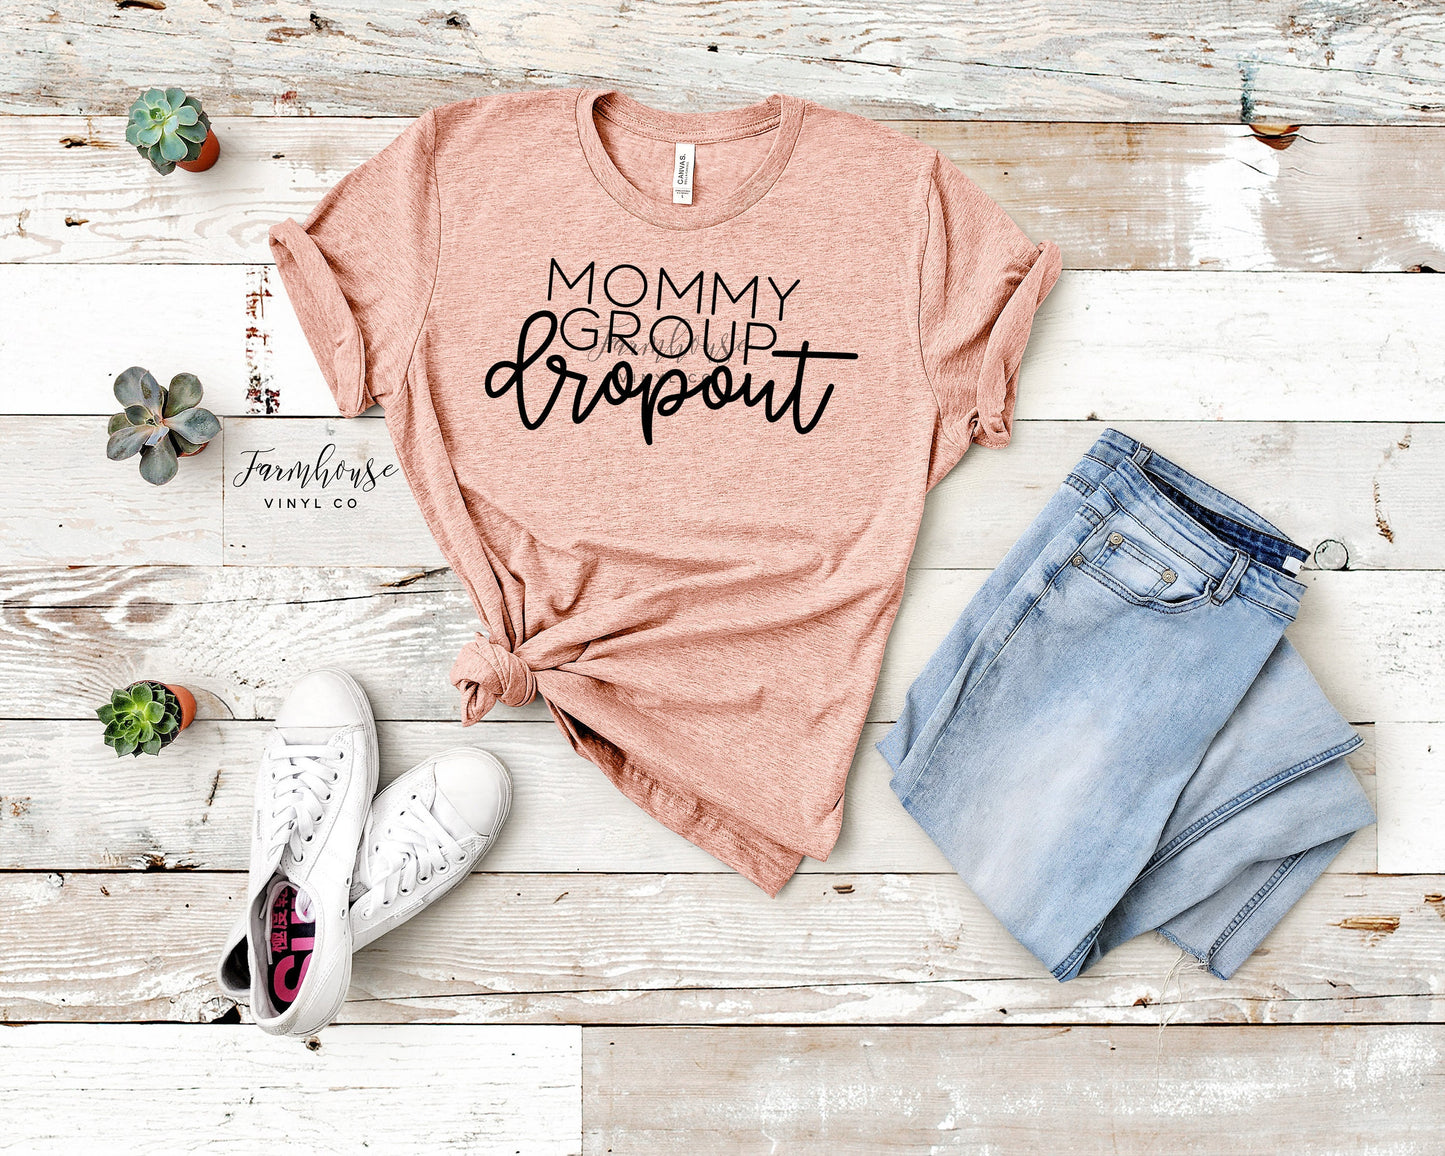 Retro Mama Tee Shirt~Mom Shirt Collection~Mom Tee Shirts~Mom Tee~Mom Shirts~SAHM~Mothers Day Gift~Homeschool Mom~Funny Mom Shirts - Farmhouse Vinyl Co